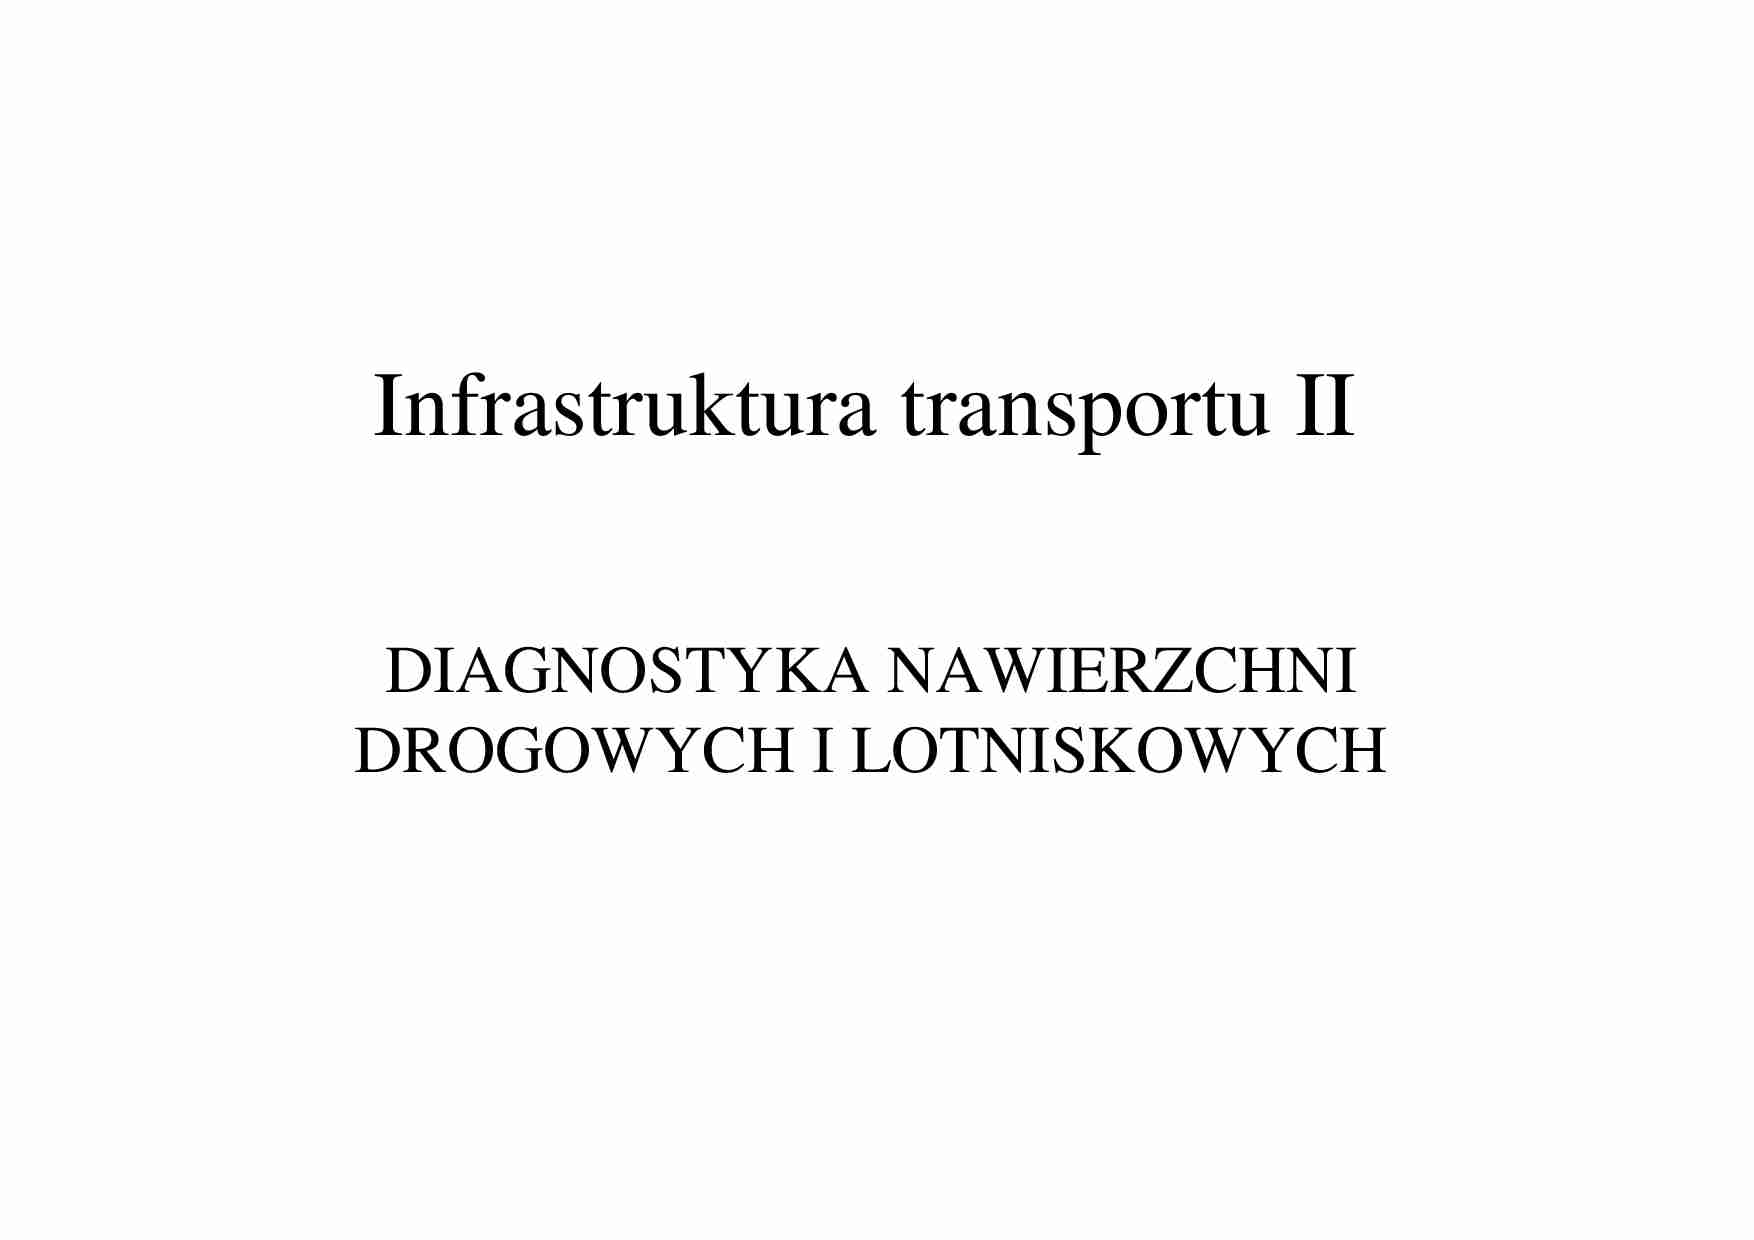 Infrastruktura transportu II  - strona 1